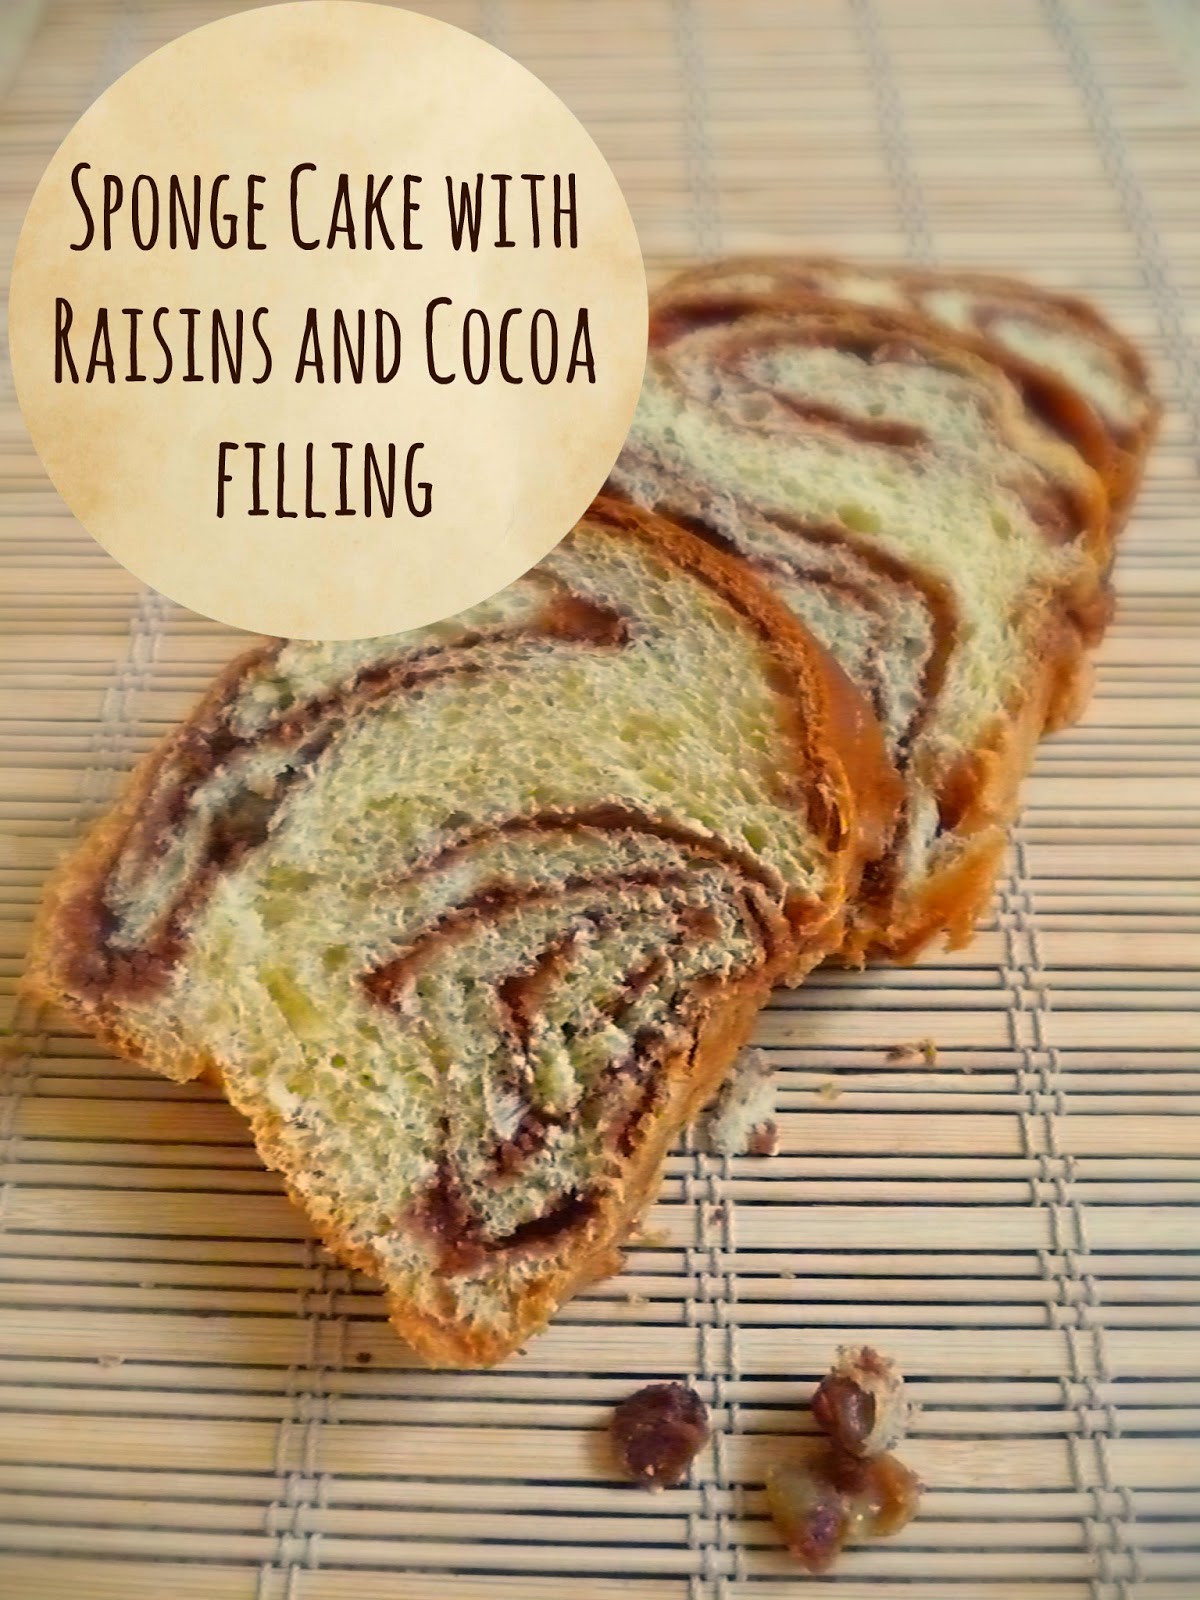 Recipe - Sponge cake with raisins and cocoa filling